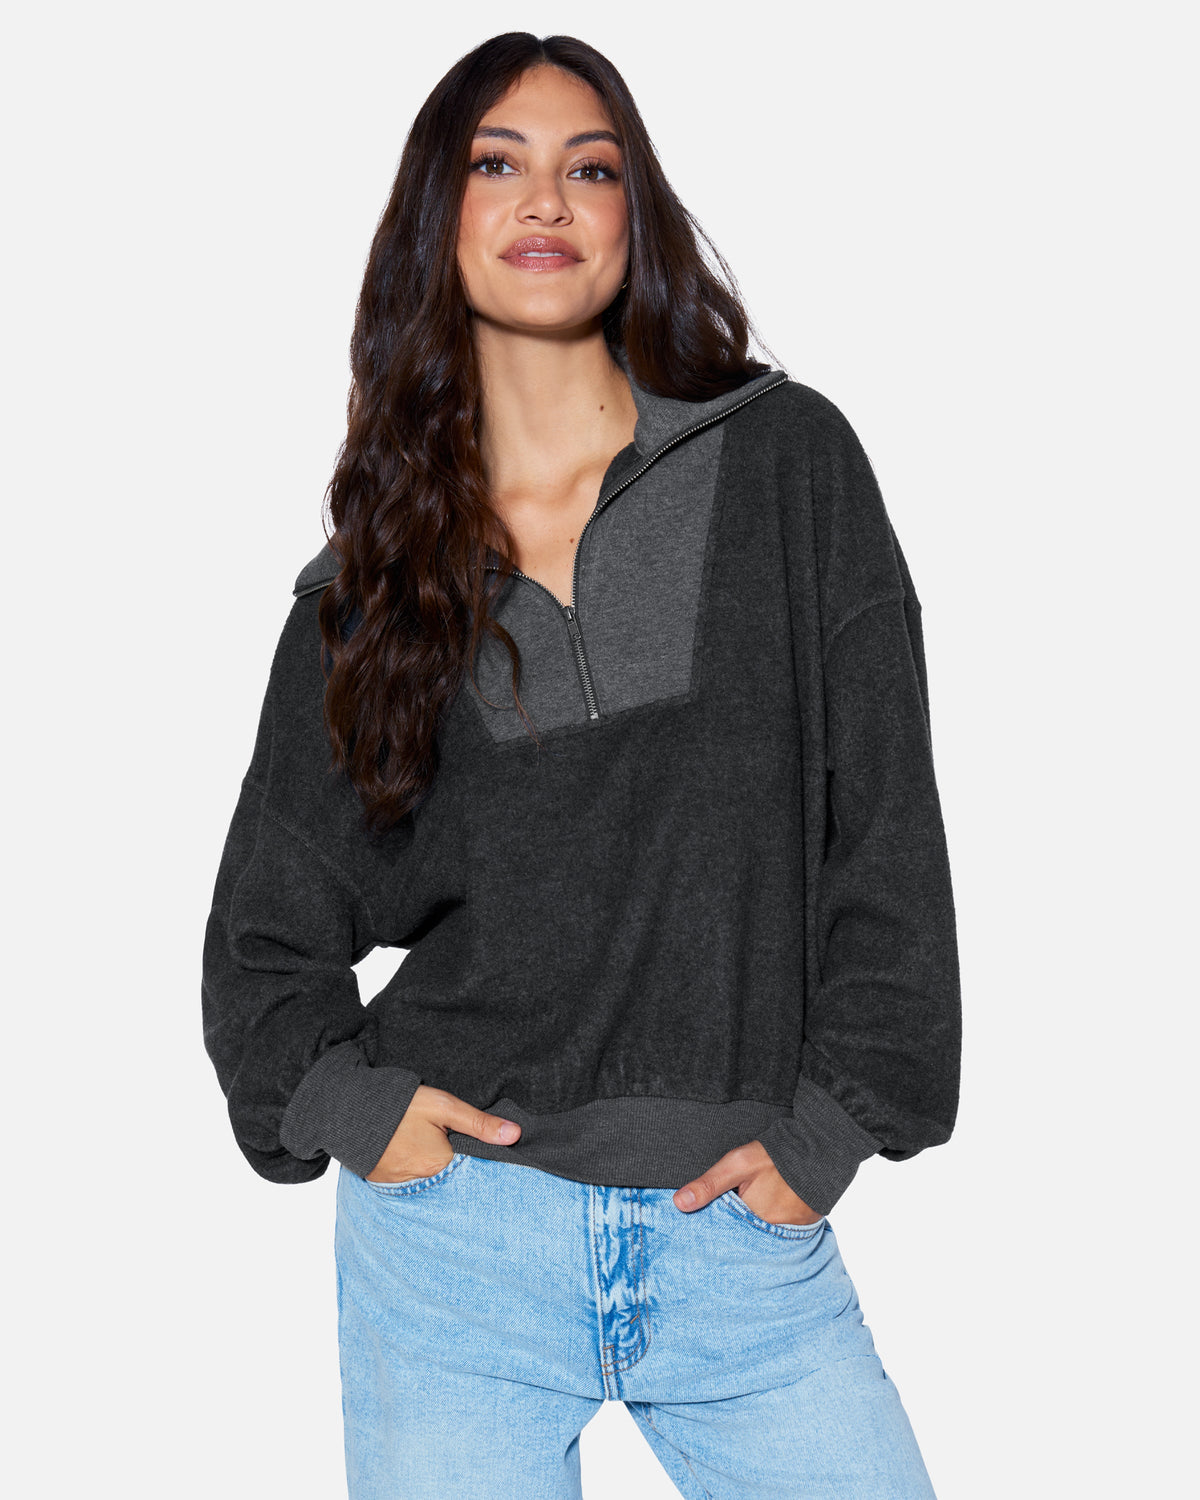 URBEST Women's Hoodies Fleece Lined Collar Pullover Half Zipper Sweatshirts  Long Sleeve Crop Sweater Tops with Thumb Hole BLACK S at  Women's  Clothing store